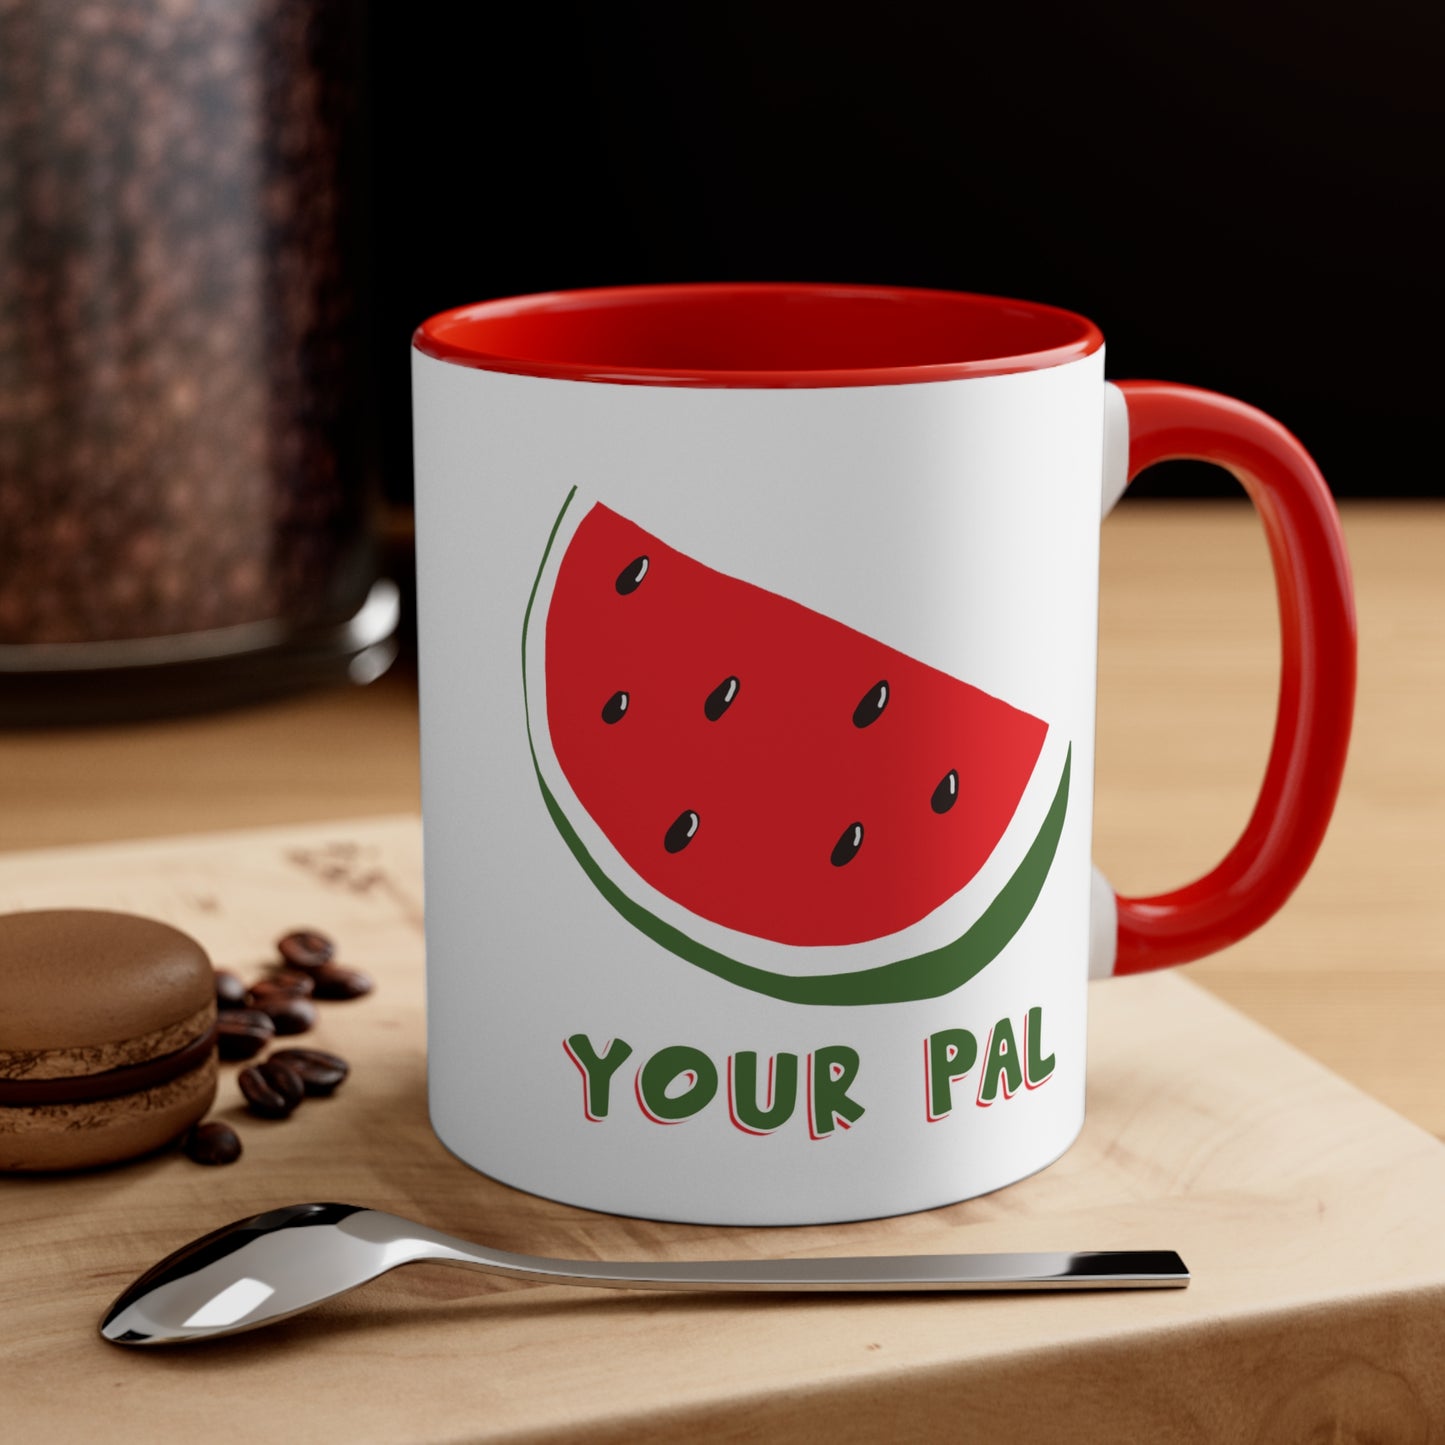 Watermelon Your Pal Mug